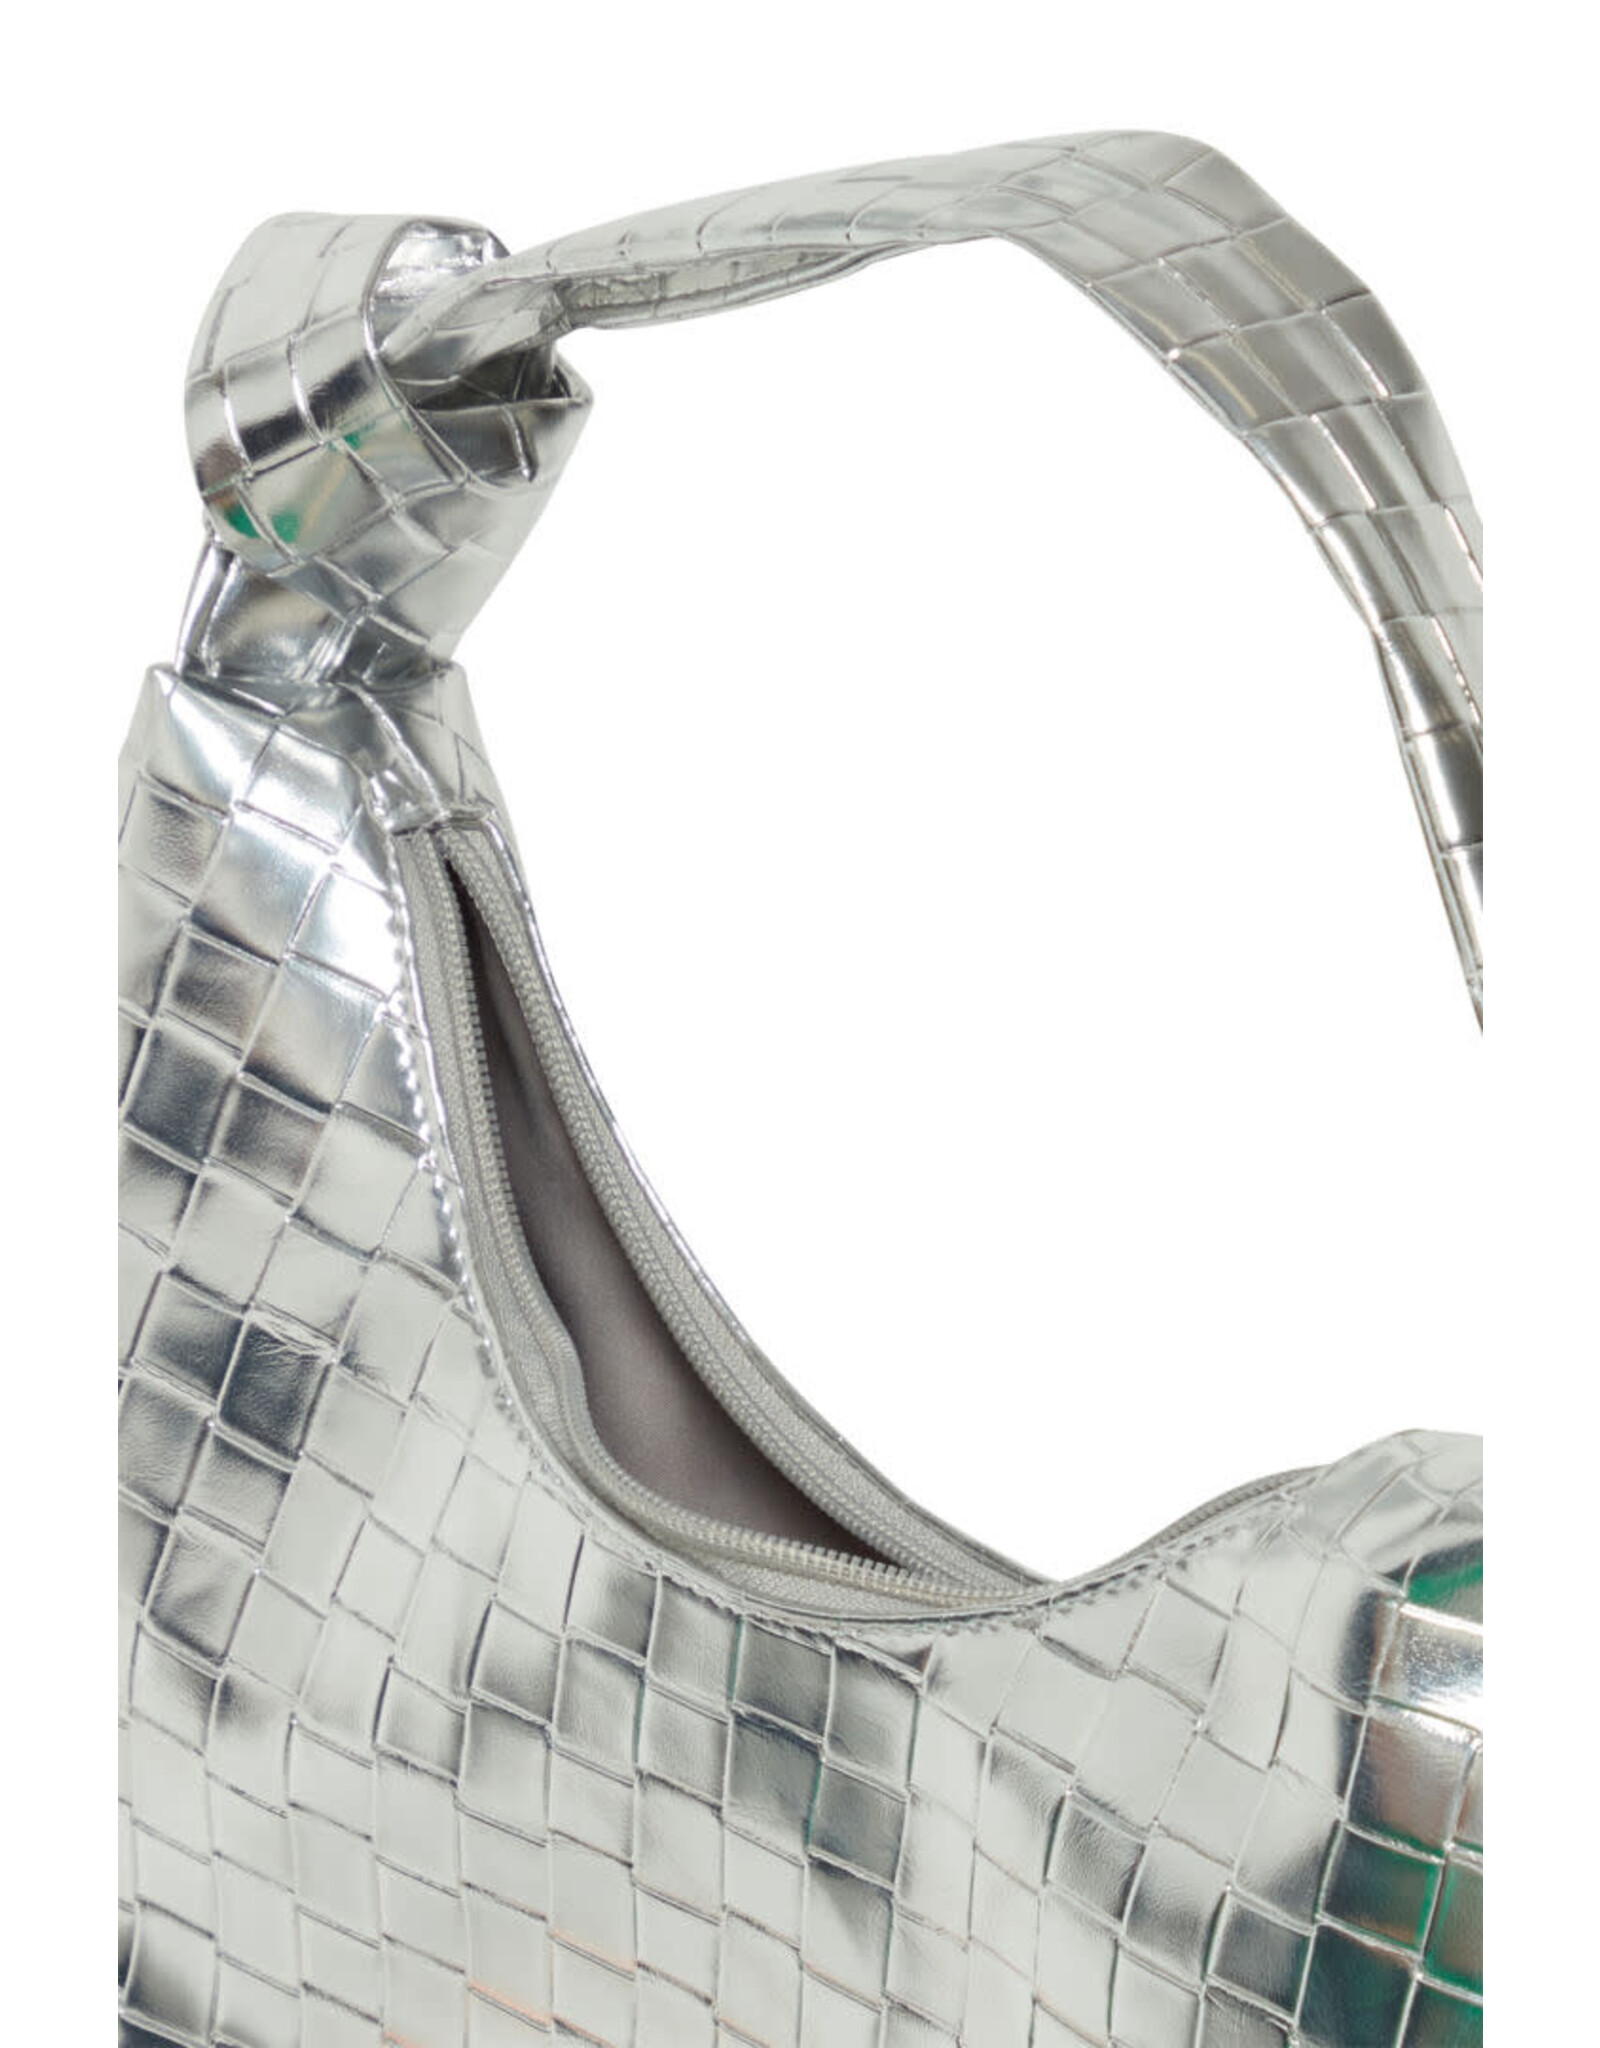 ICHI ICHI - Miley shoulder bag (silver)